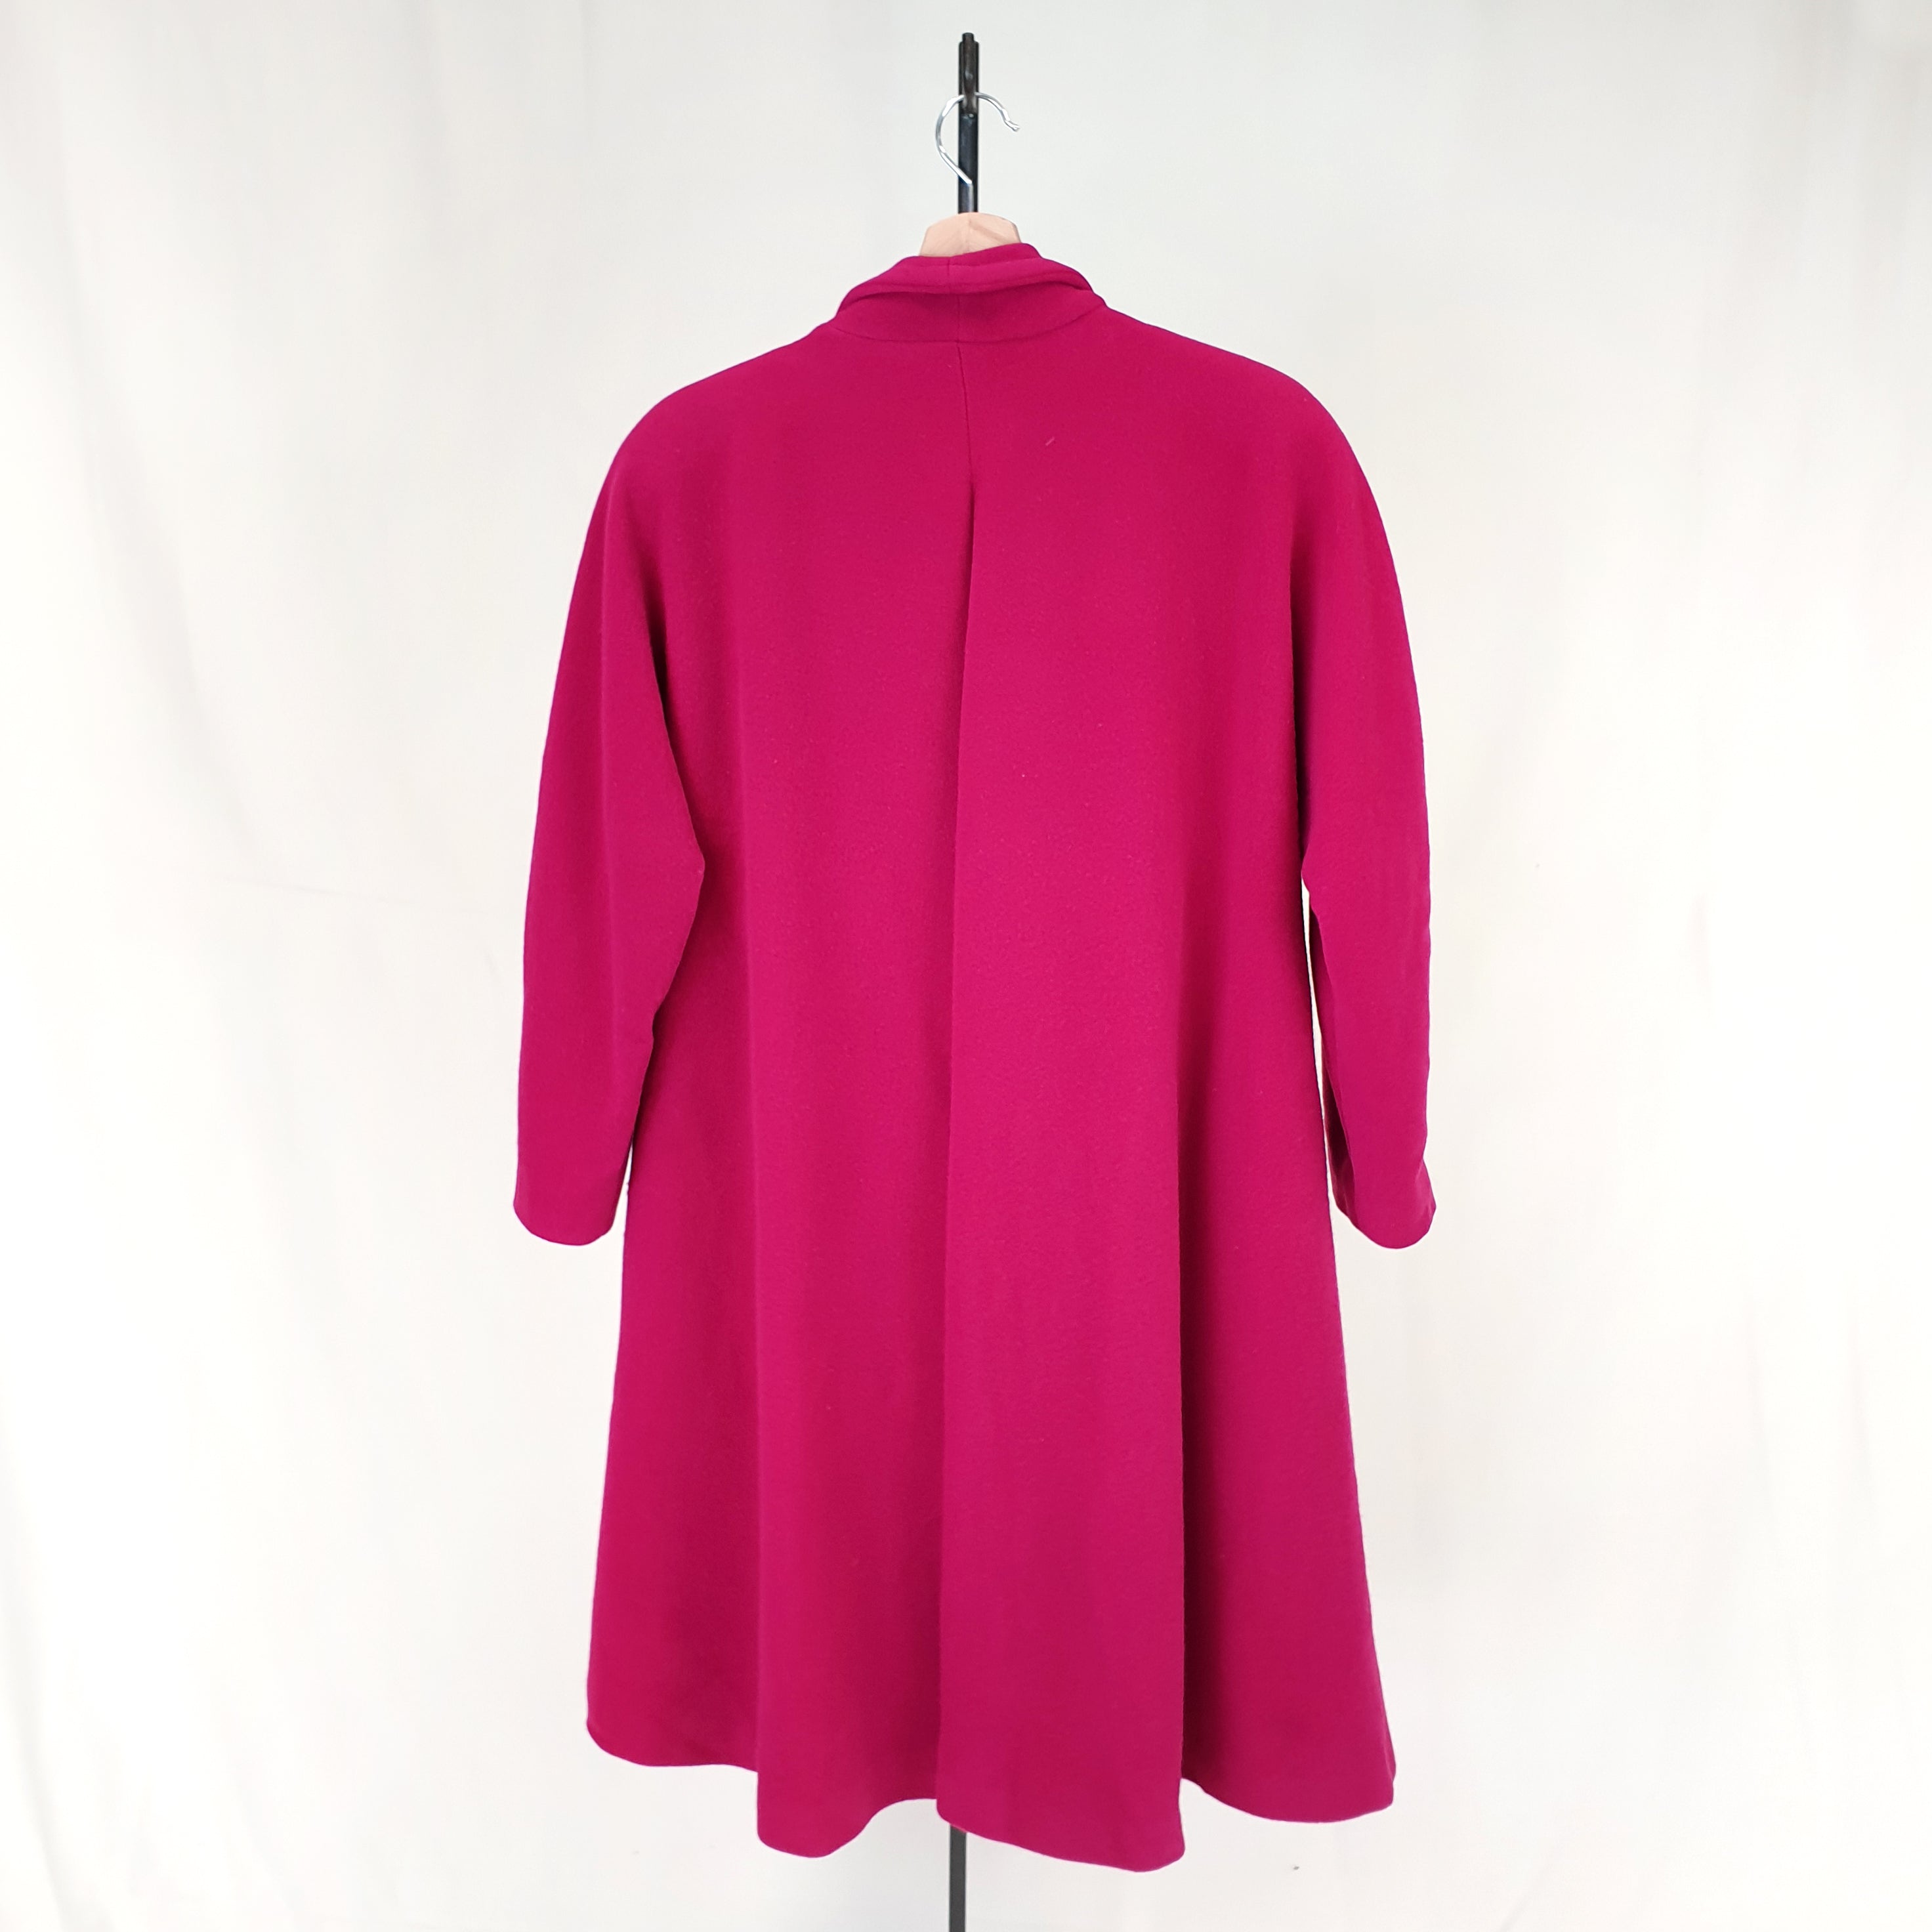 Gianfranco Ferre Fuchsia Pink Wool Coat